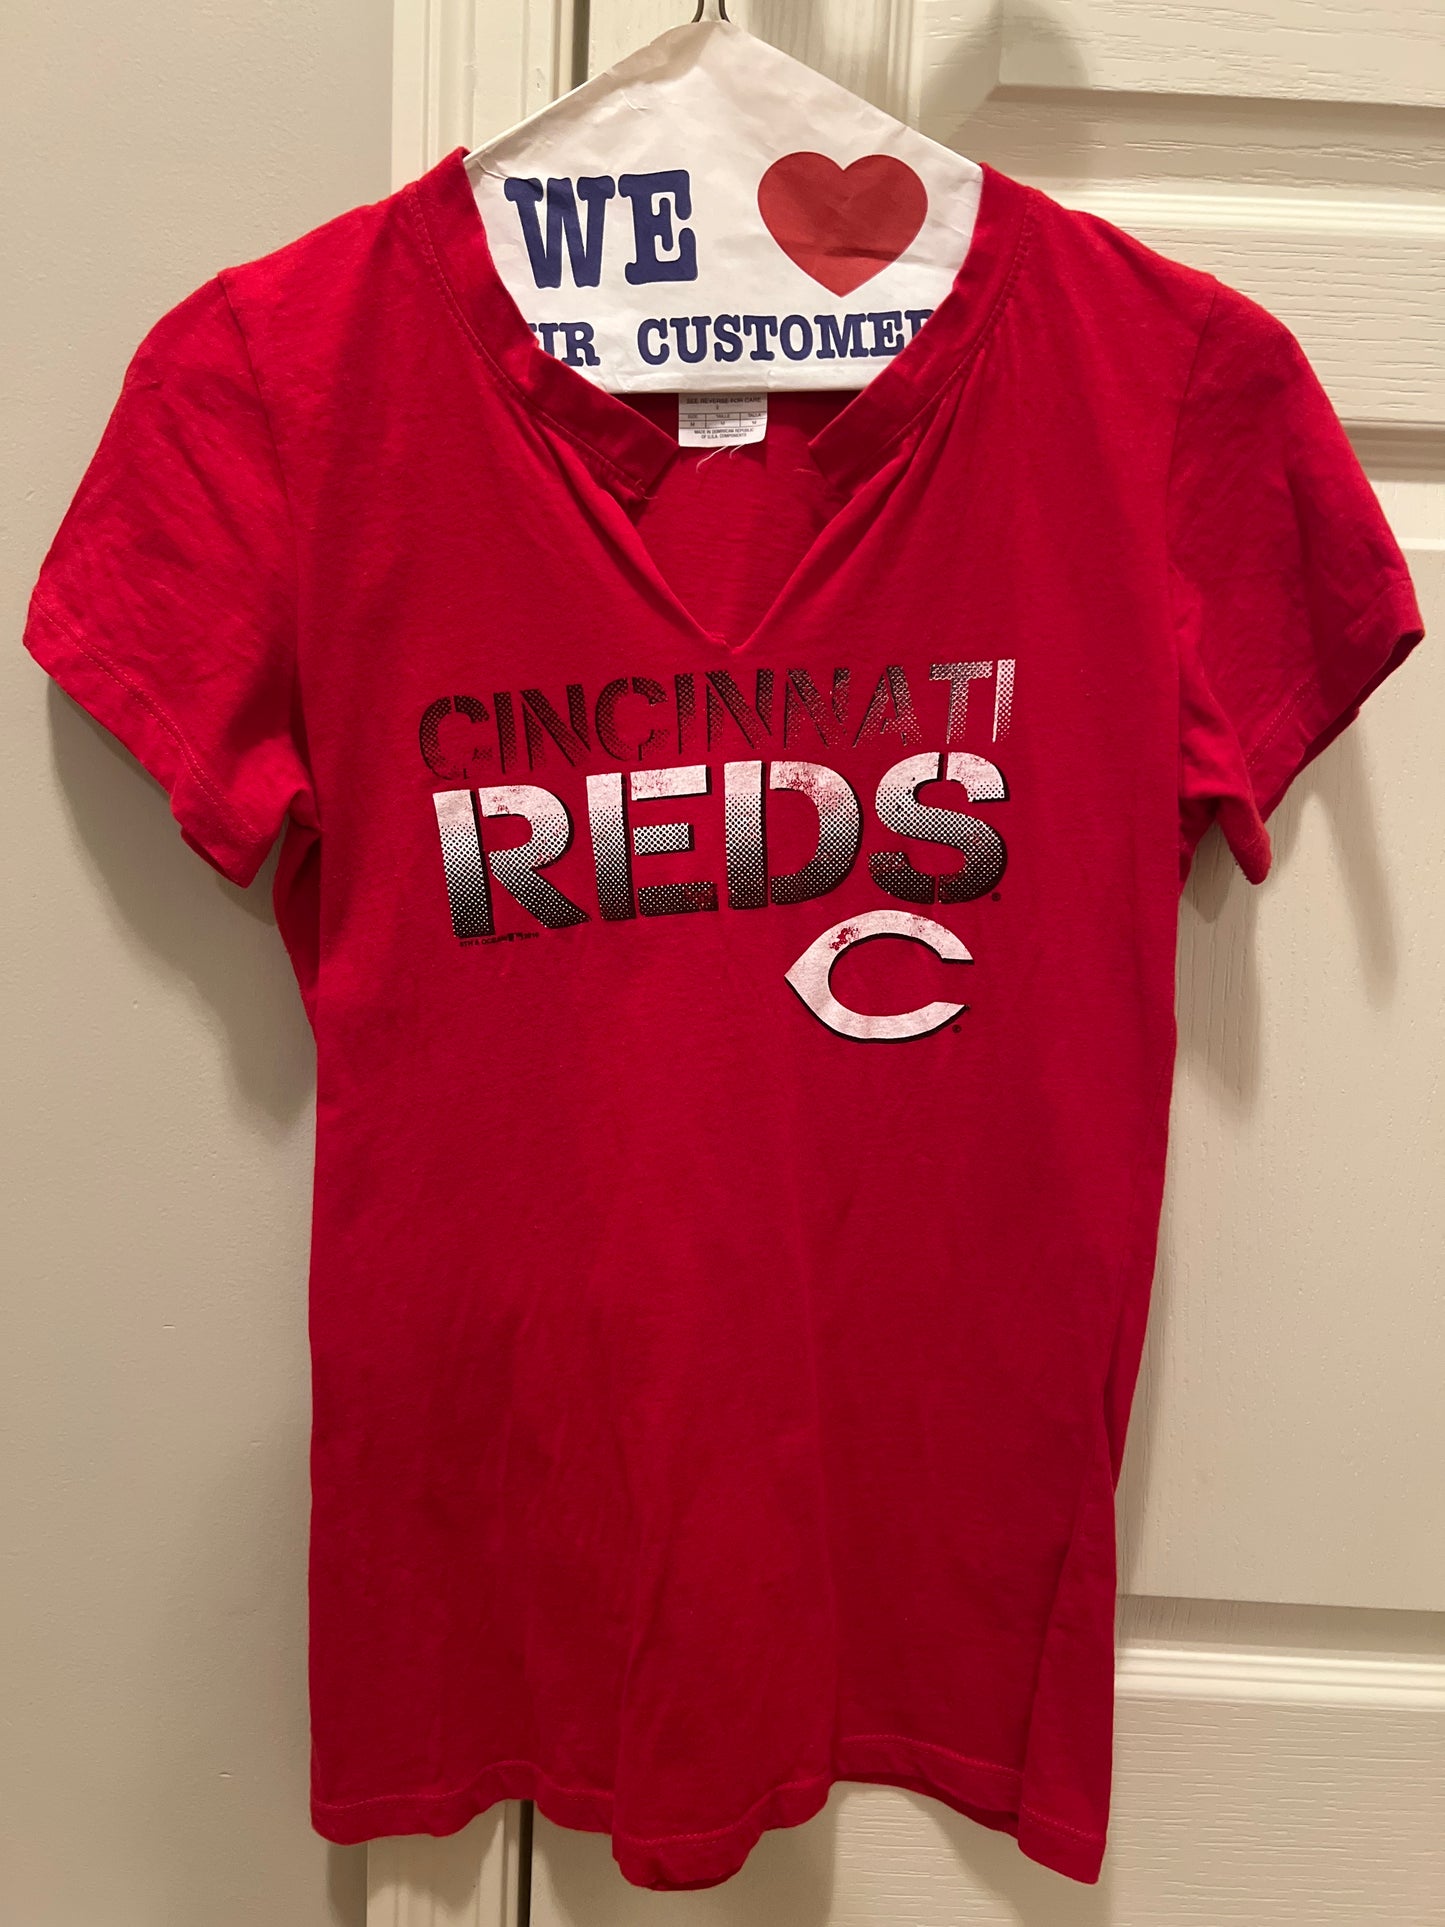 Women’s Cincinnati Reds tshirt size M